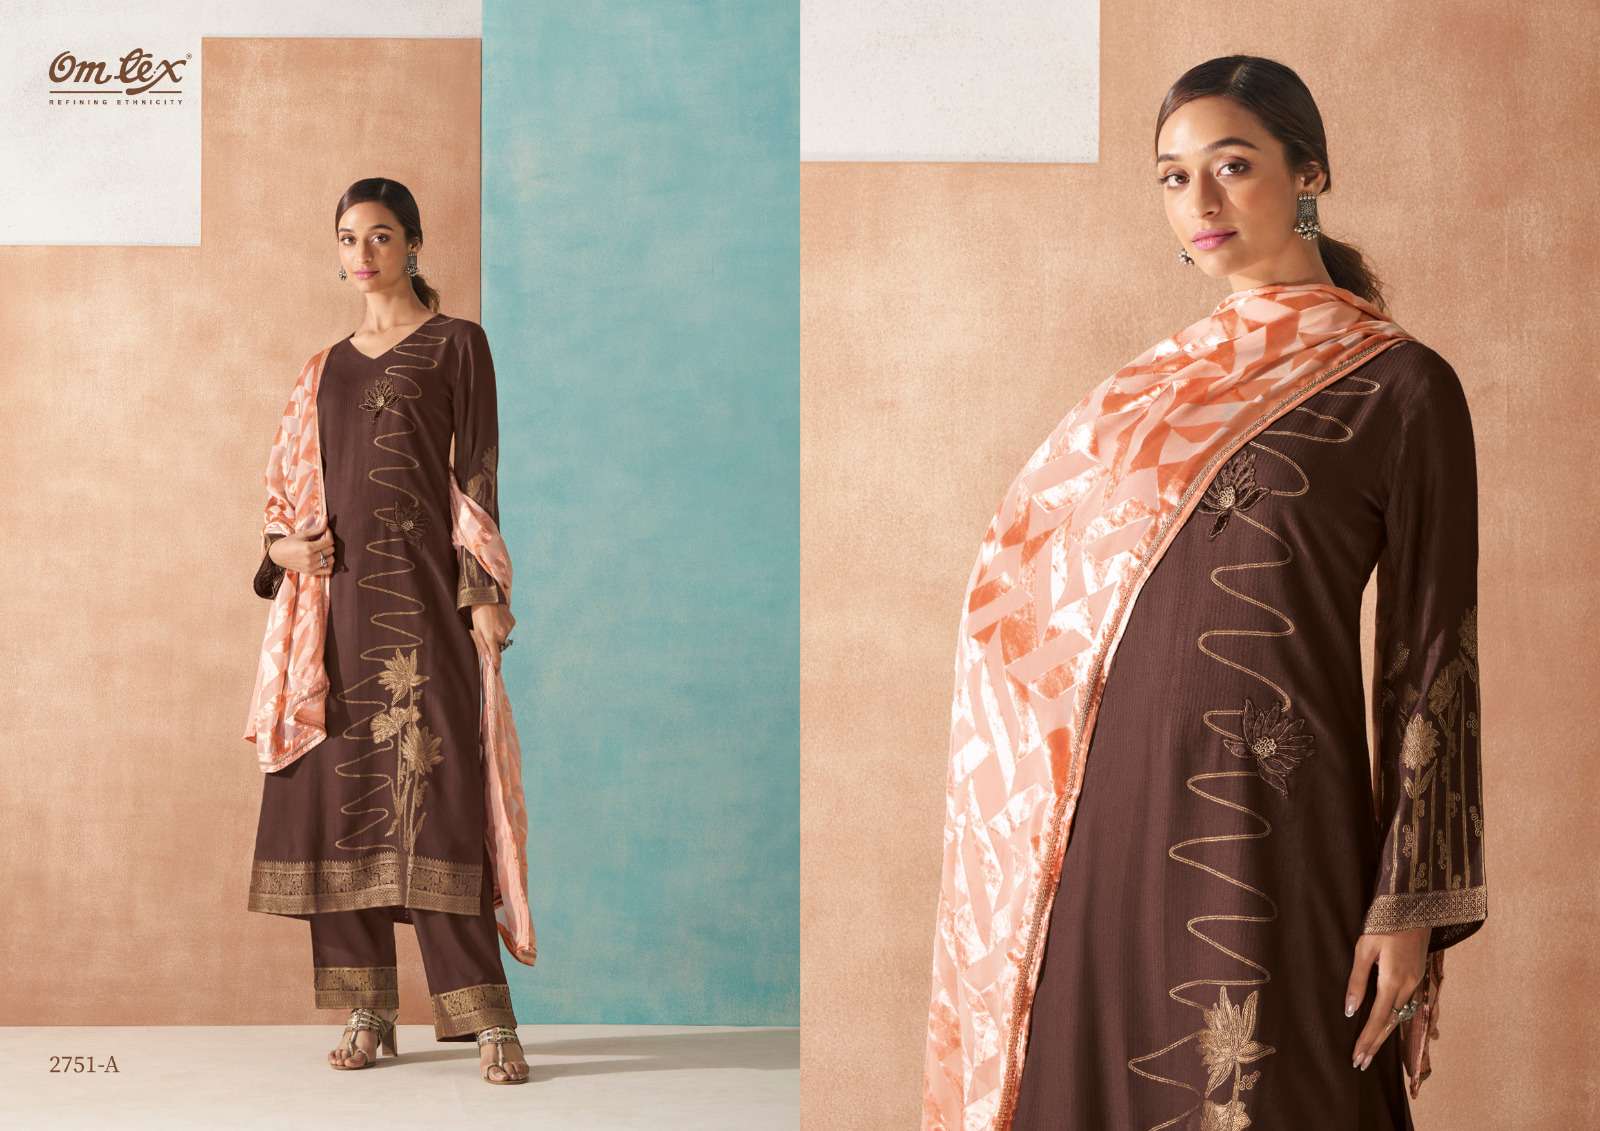 omtex gohar 2751 colour series latest designer salwar kameez wholesaler surat gujarat